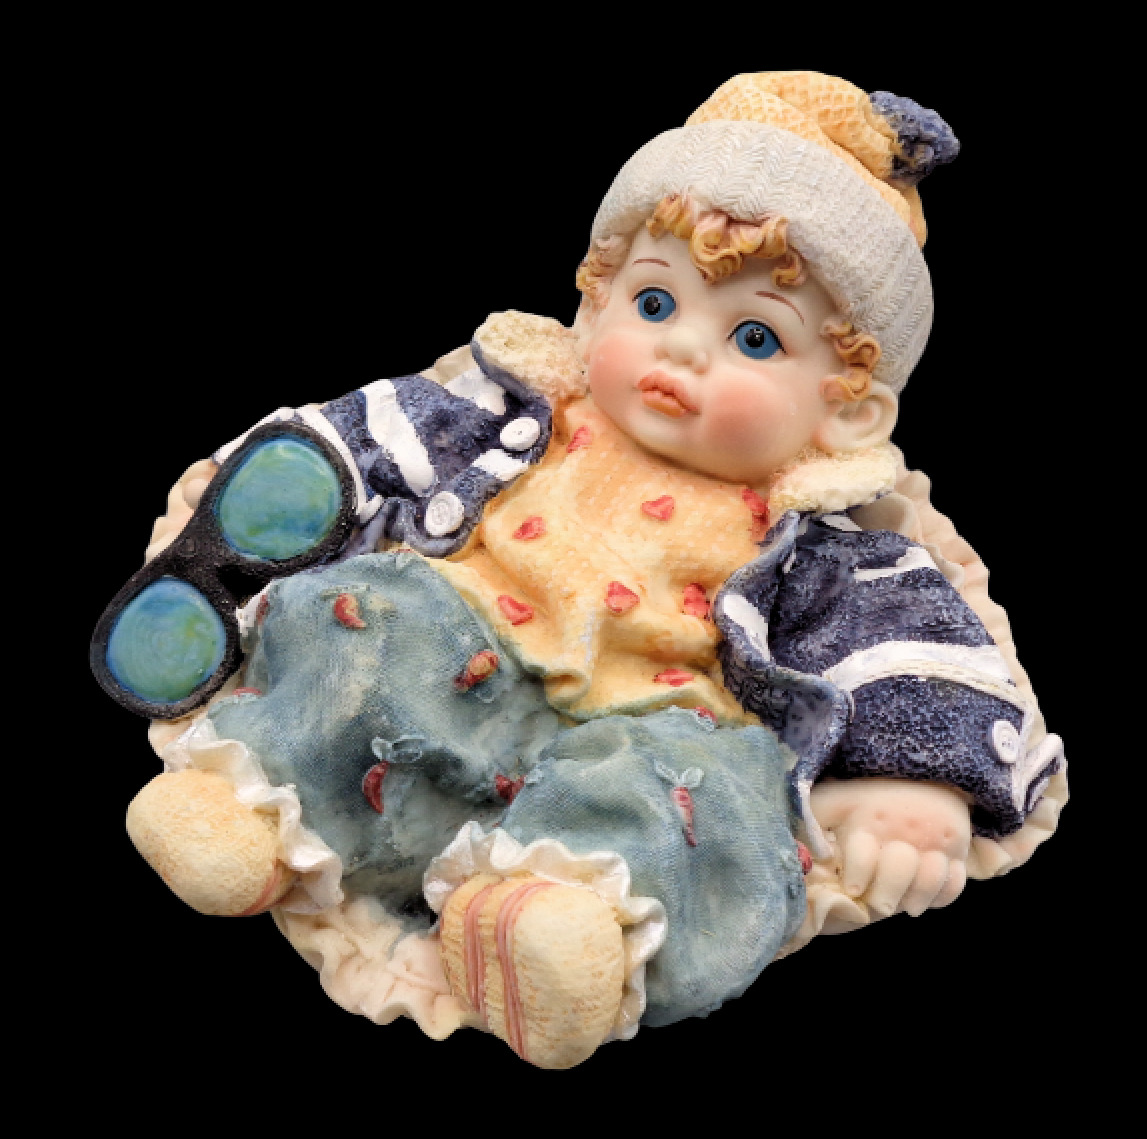 Vintage Resin Statue Figurine Blonde Hair Blue Eyes Baby Toddler Boy Child Kid